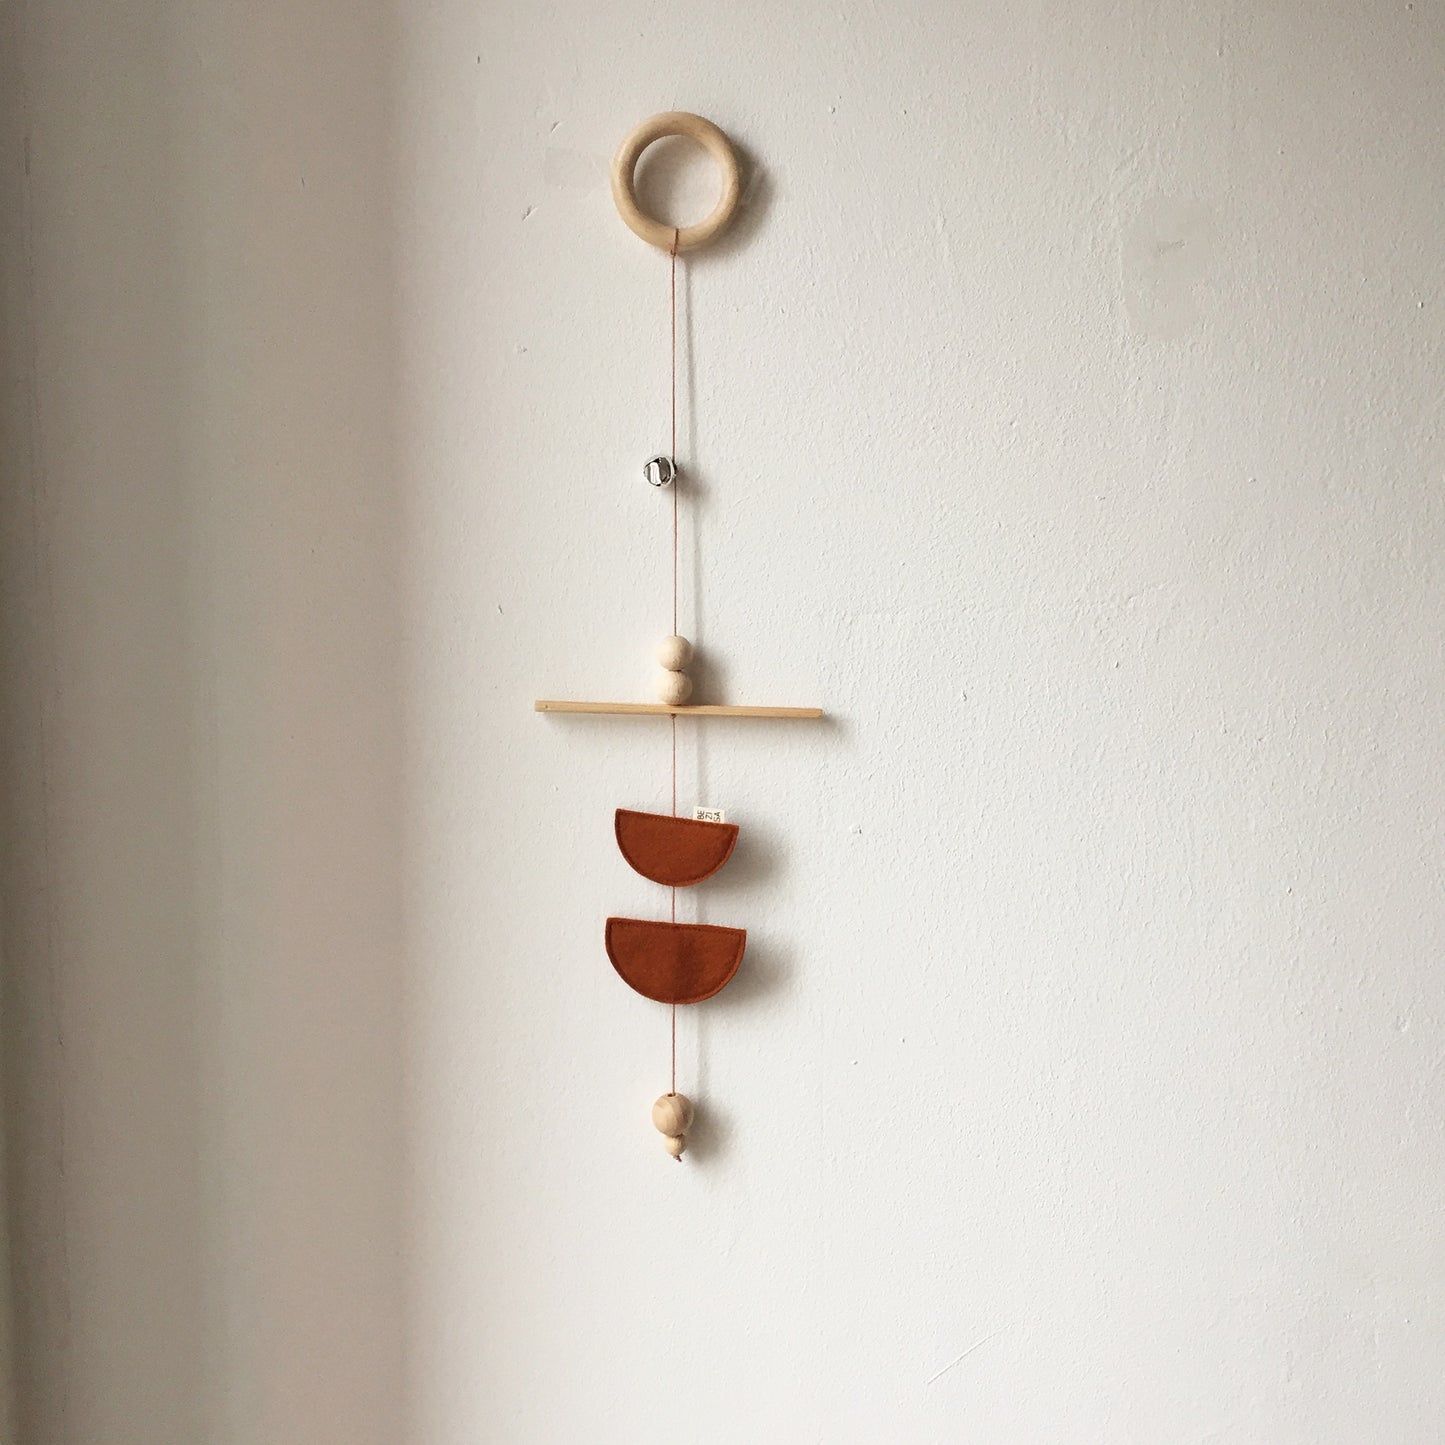 rubra - mobile / wall hanging